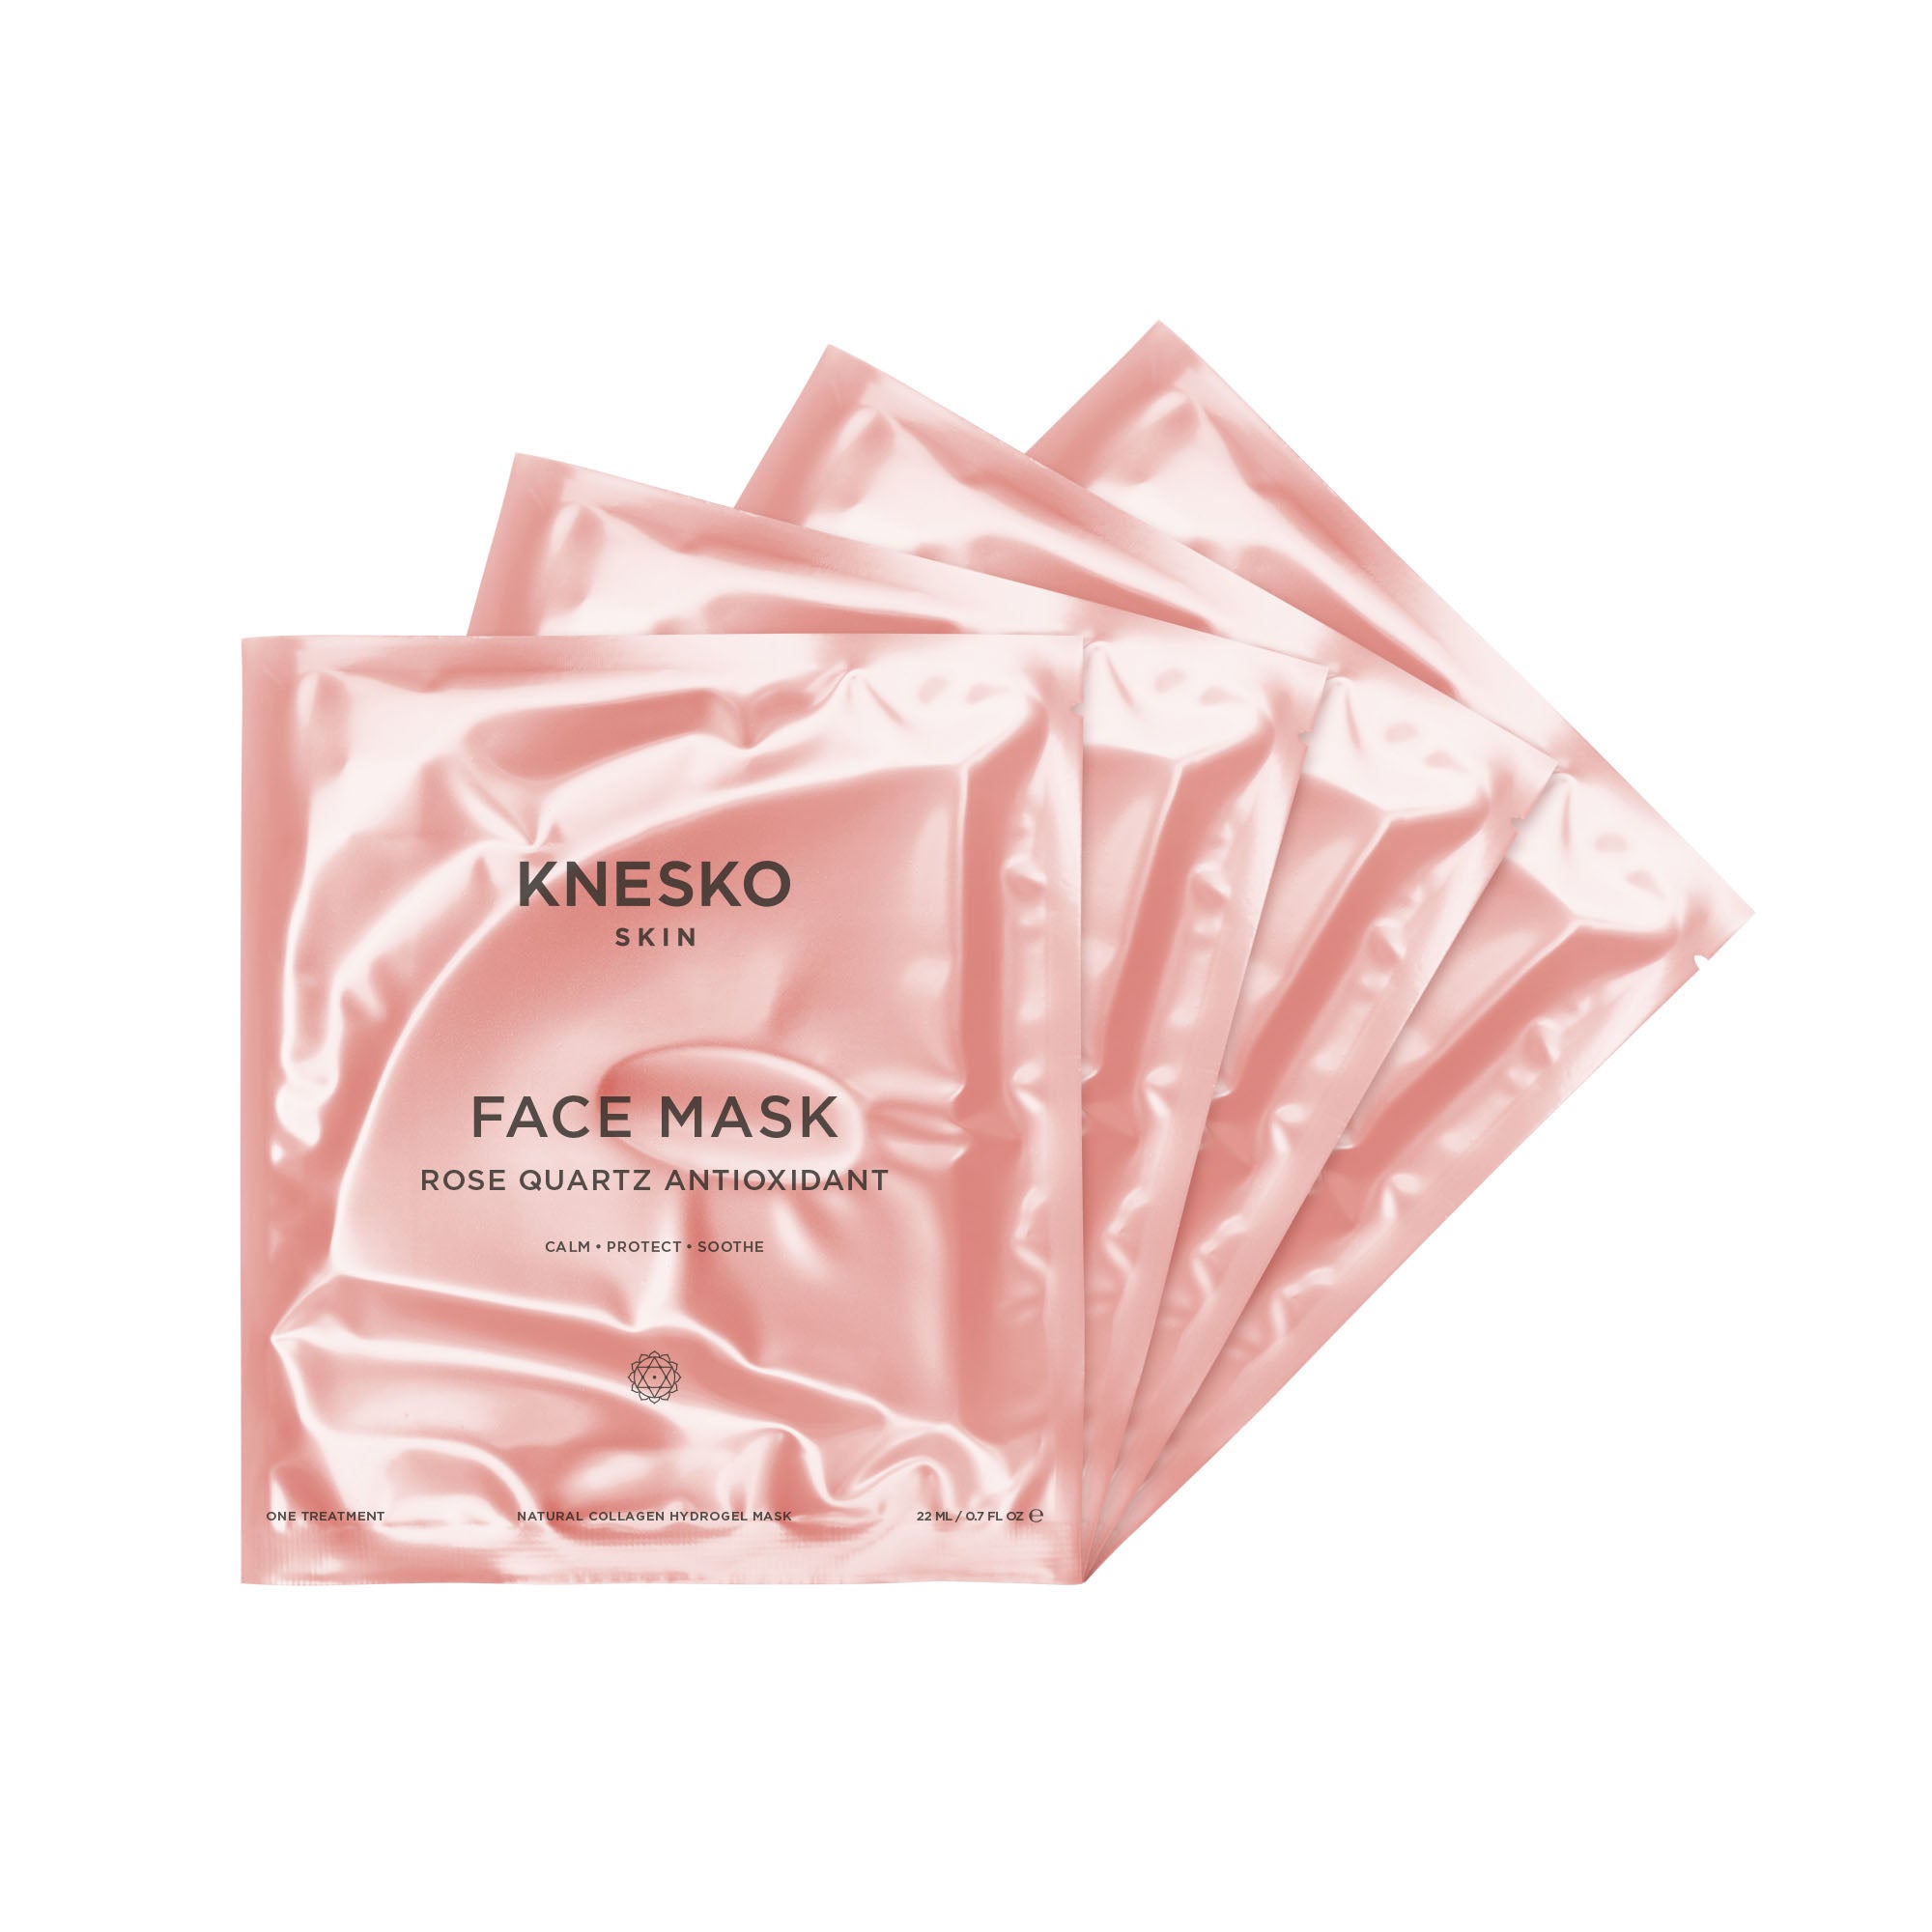 Rose Quartz Antioxidant Face Mask - 4 Pack | Knesko